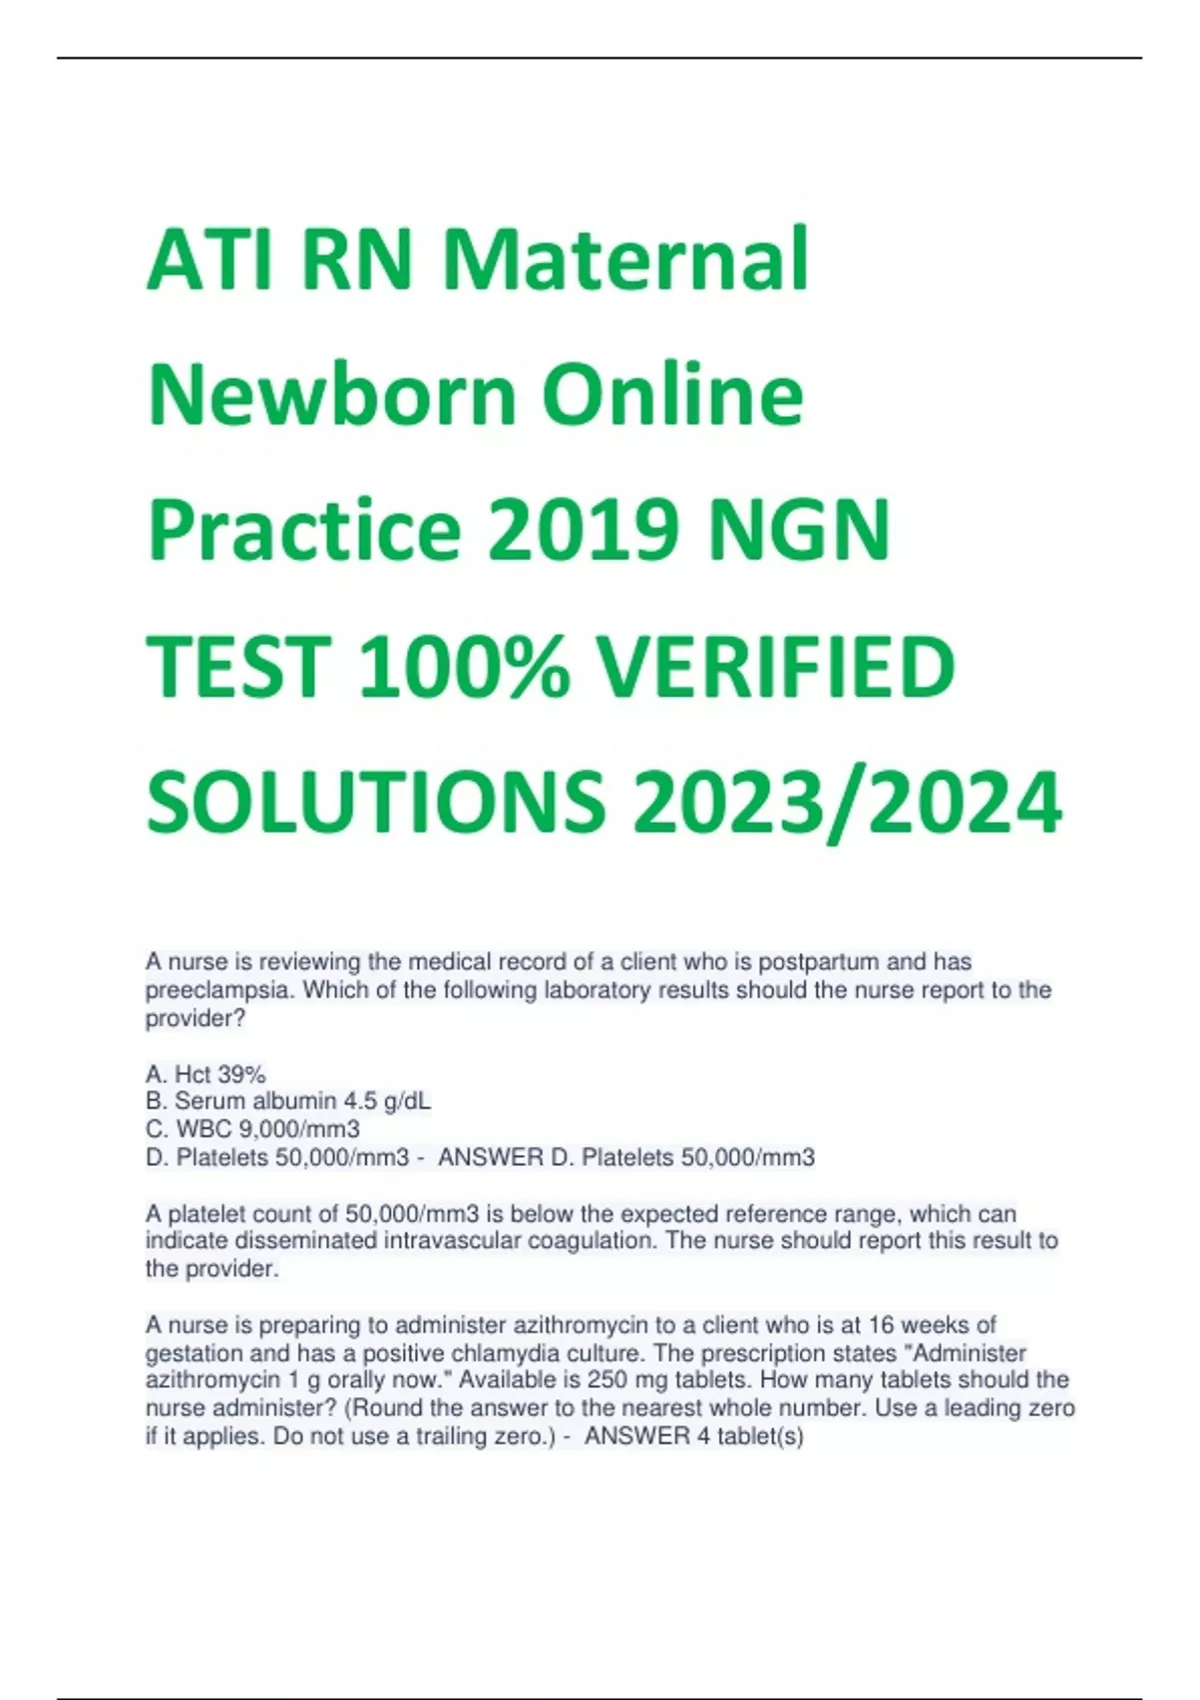 ATI RN Maternal Newborn Online Practice 2019 NGN TEST 100 VERIFIED